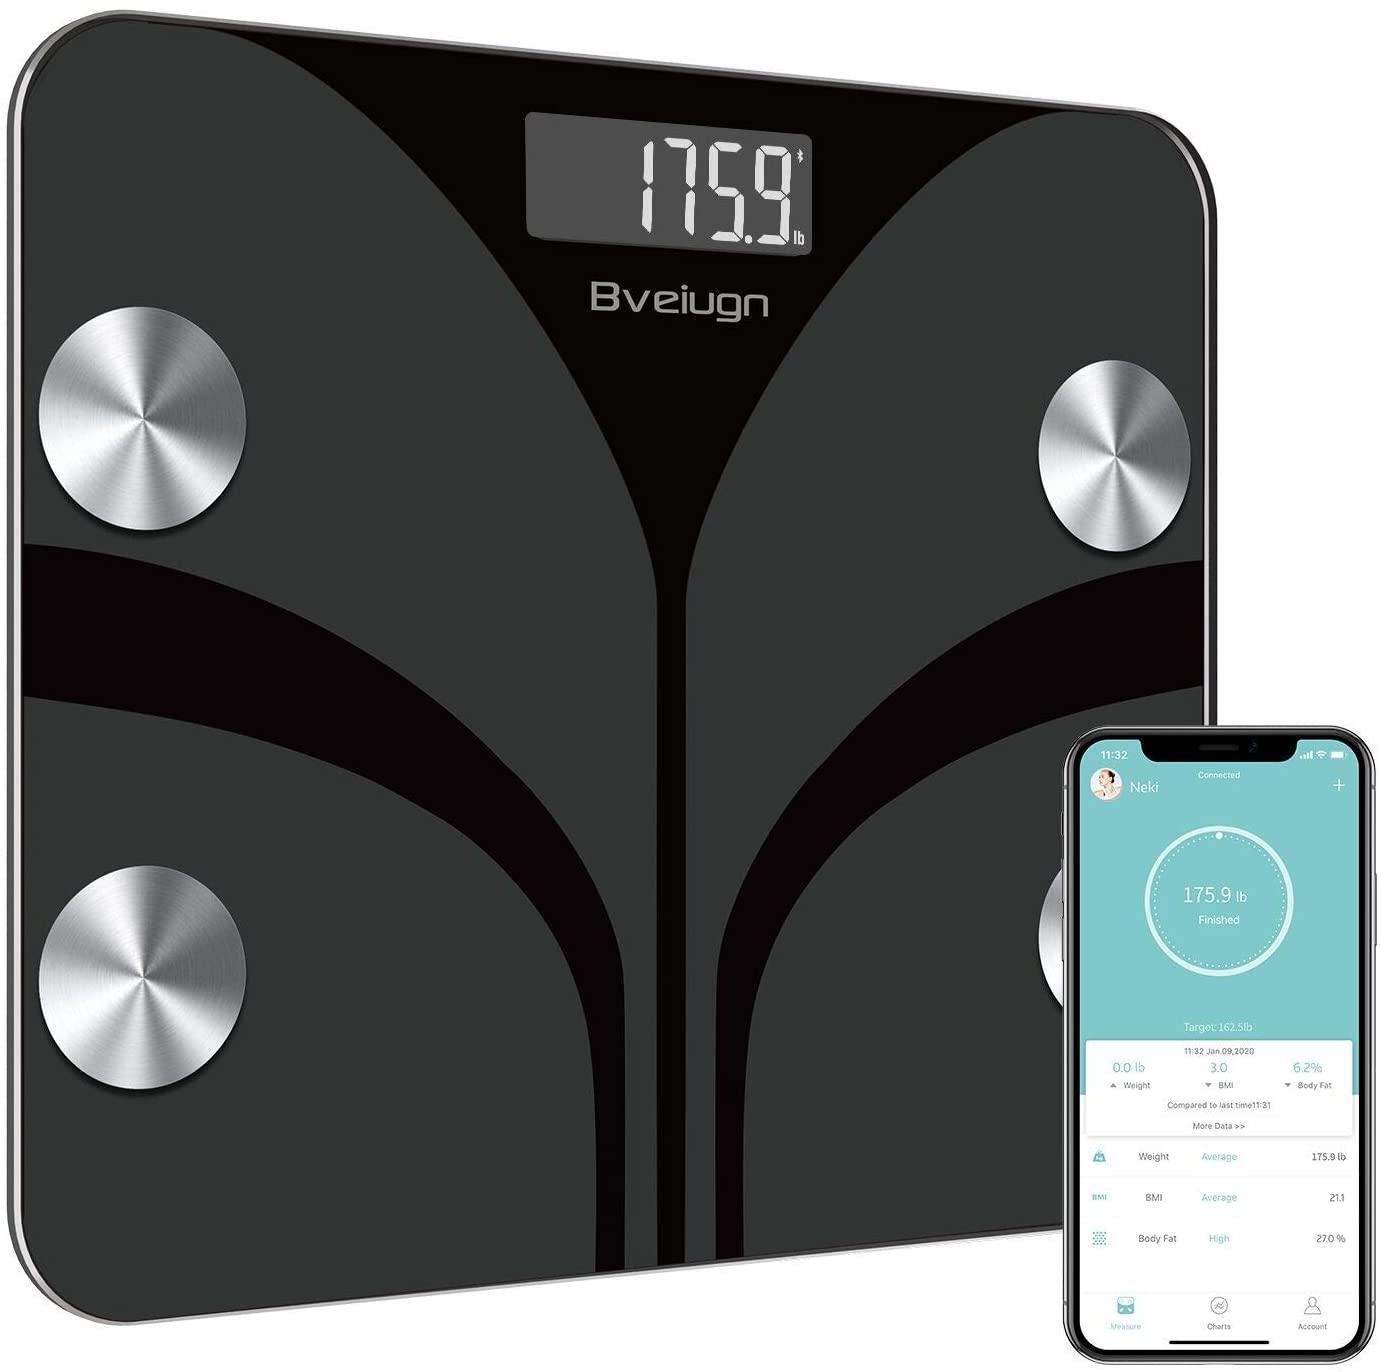 Body Fat Smart Wireless Scale for $20.99